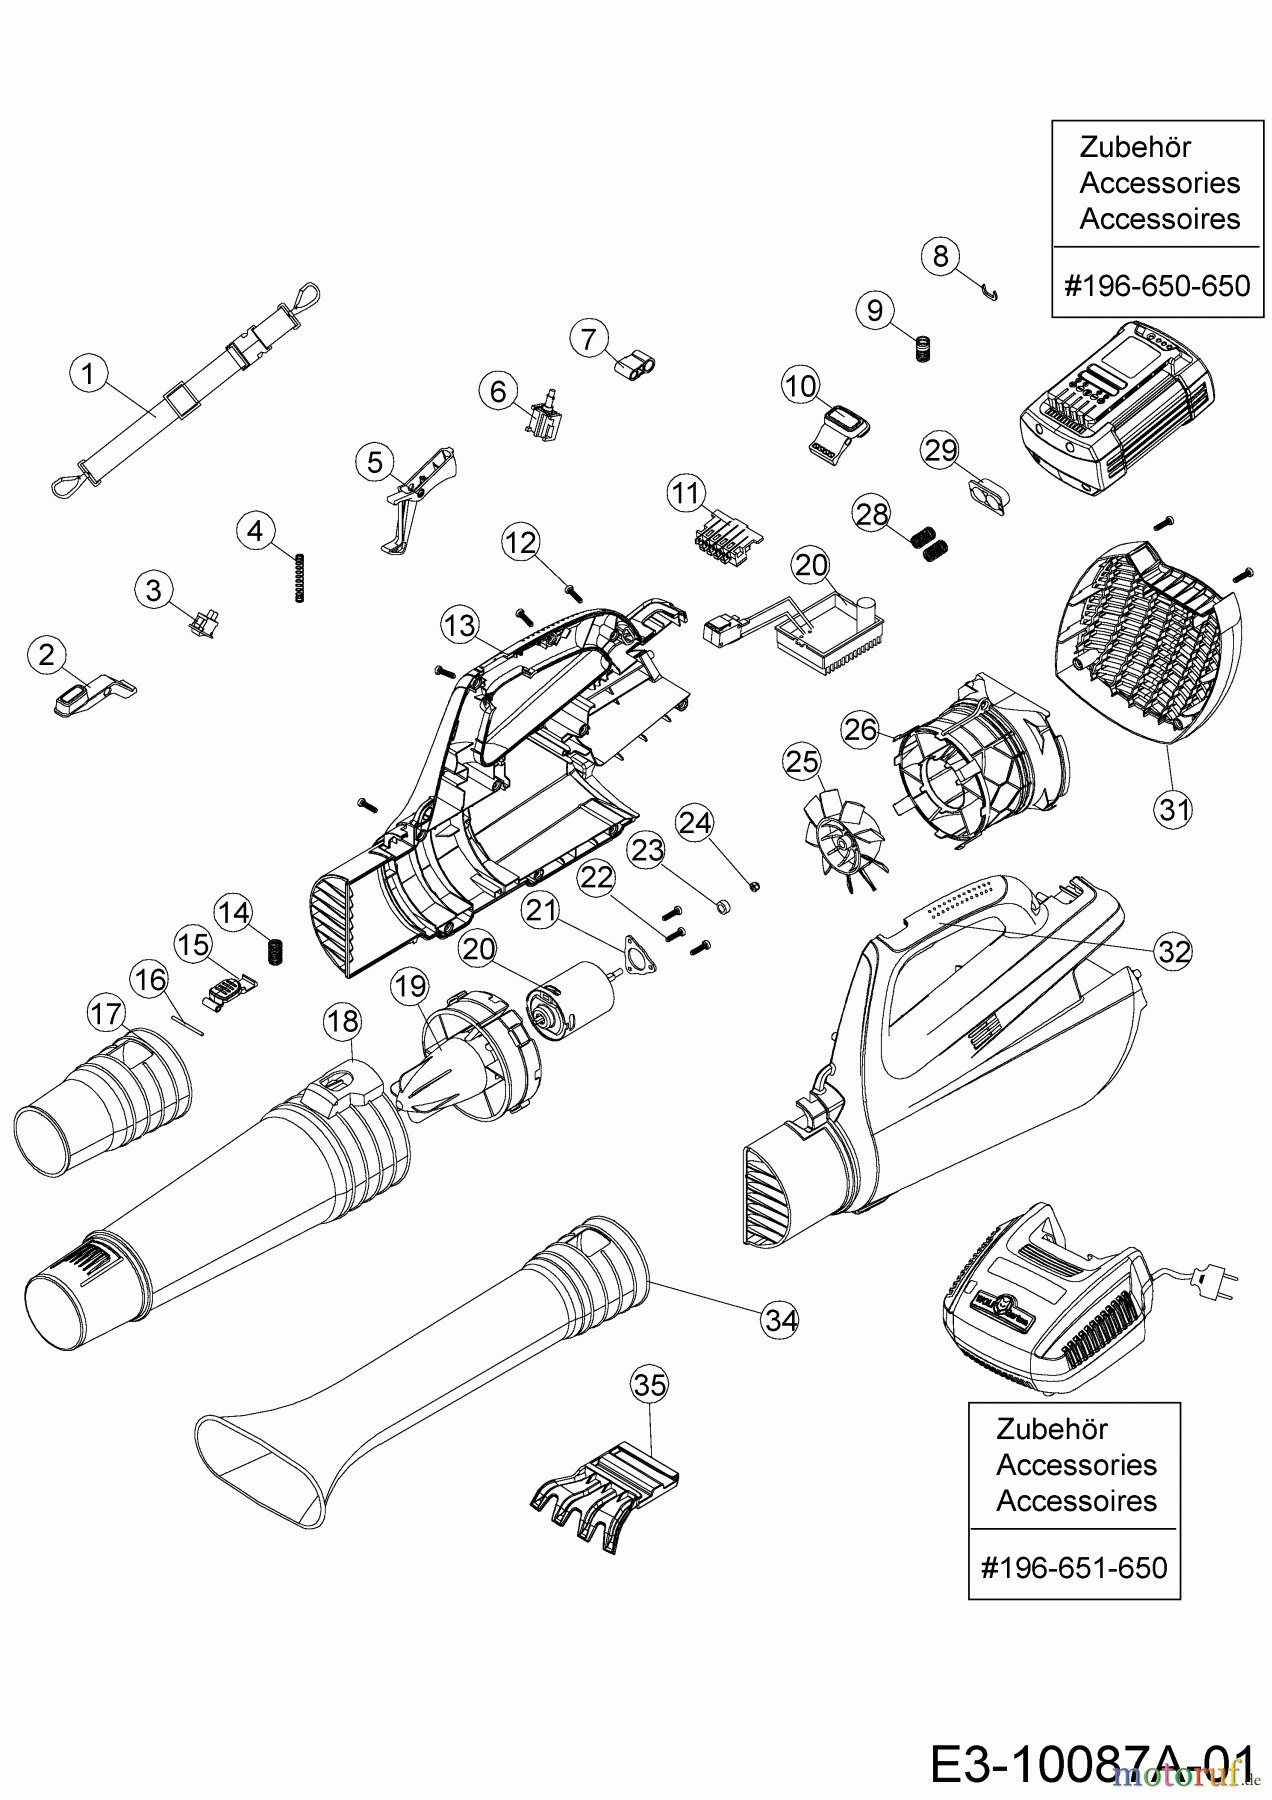  Wolf-Garten battery leaf blower 72V Li-Ion Power 24 B 41AA0BO-650  (2020) Basic machine